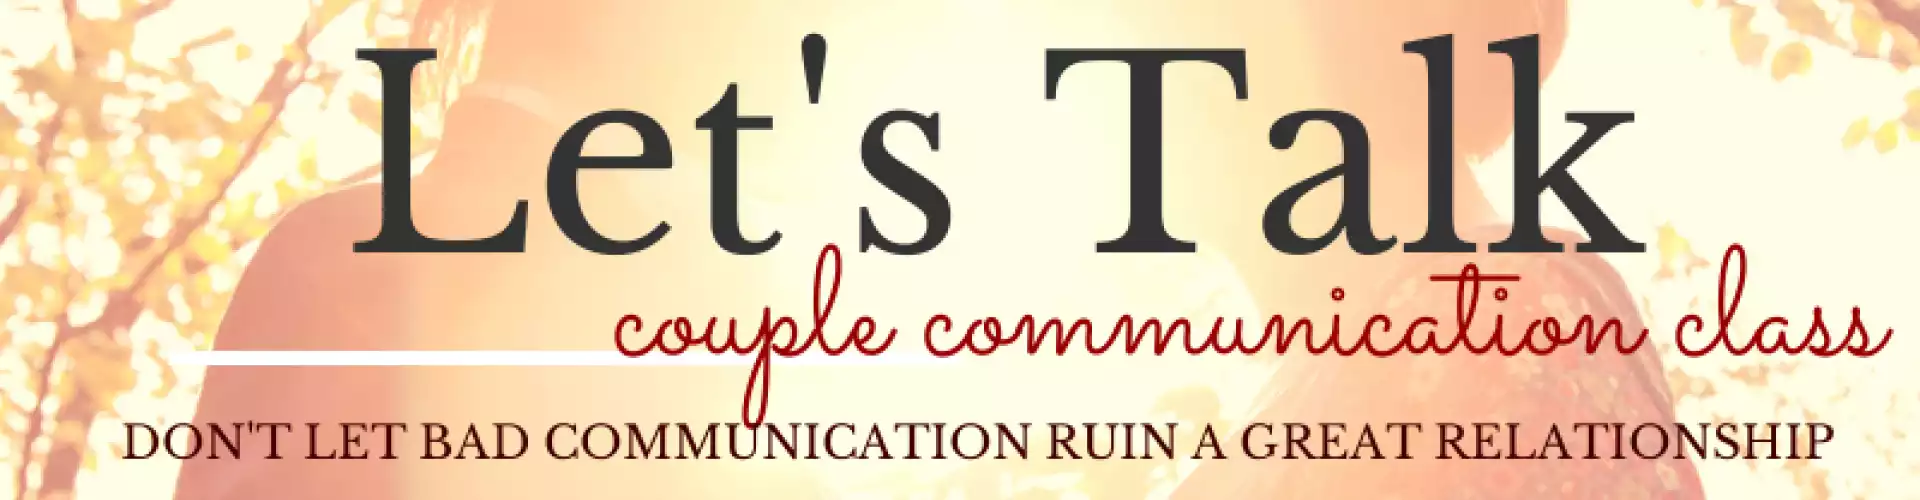 Couples Communication